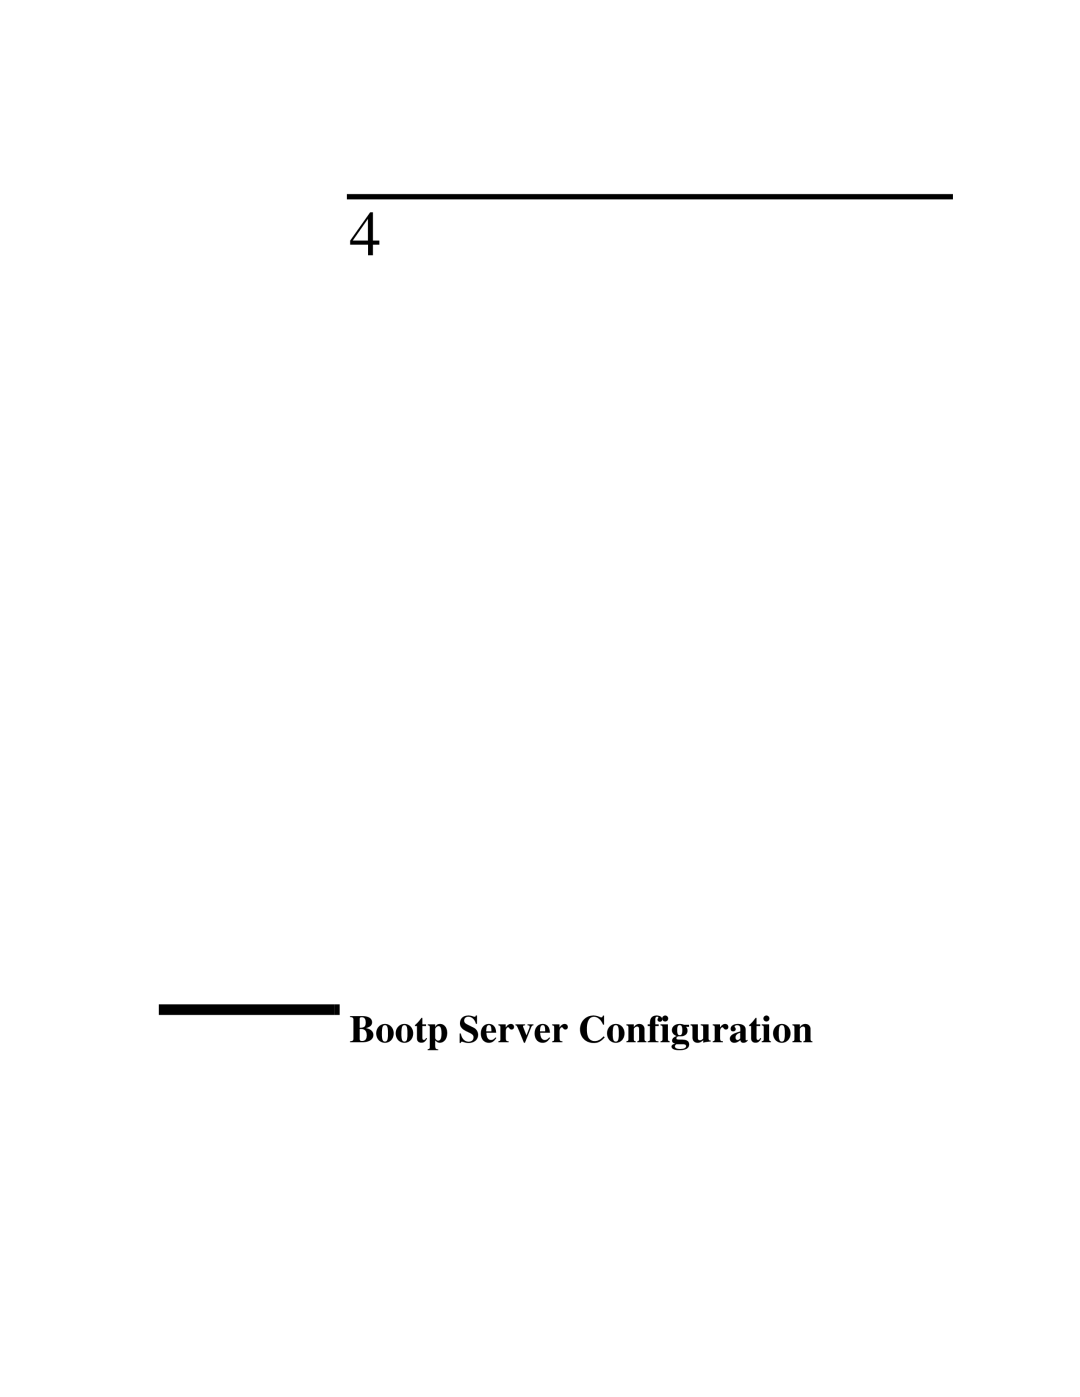 IBM 4986B LanProbe manual Bootp Server Configuration 